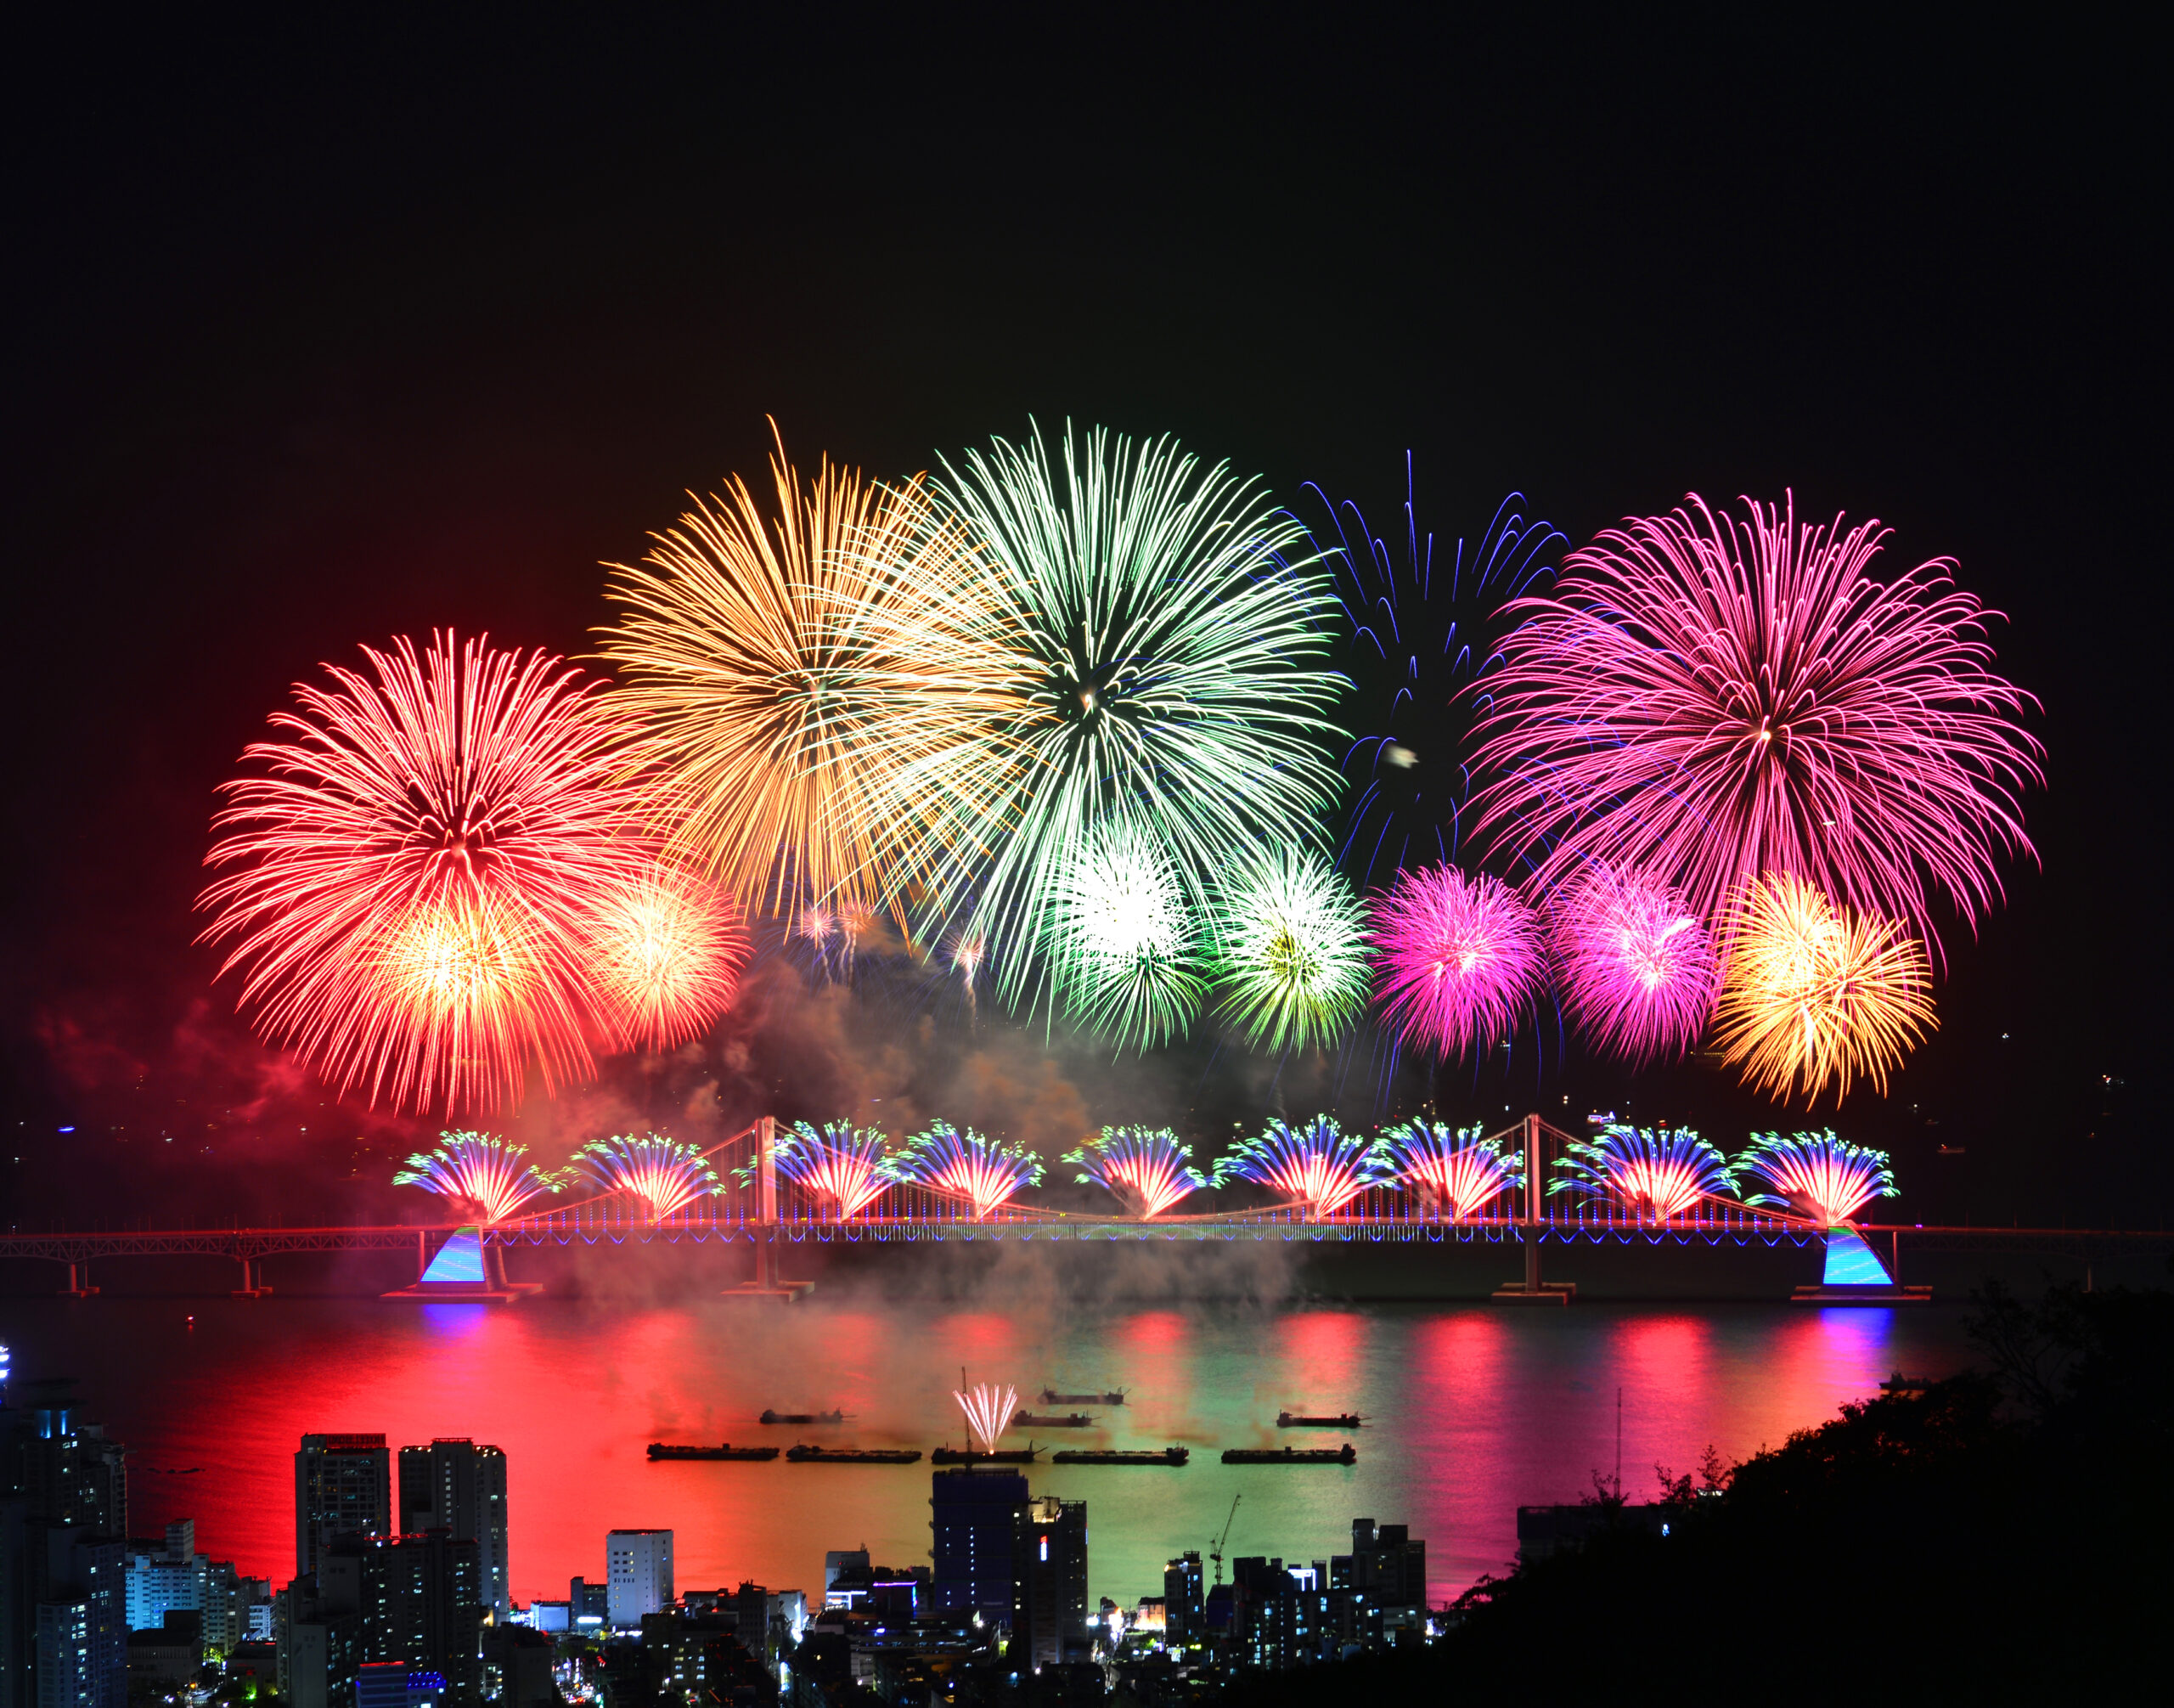 A skyline of fireworks lighting the night sky, Busan, South Korea.